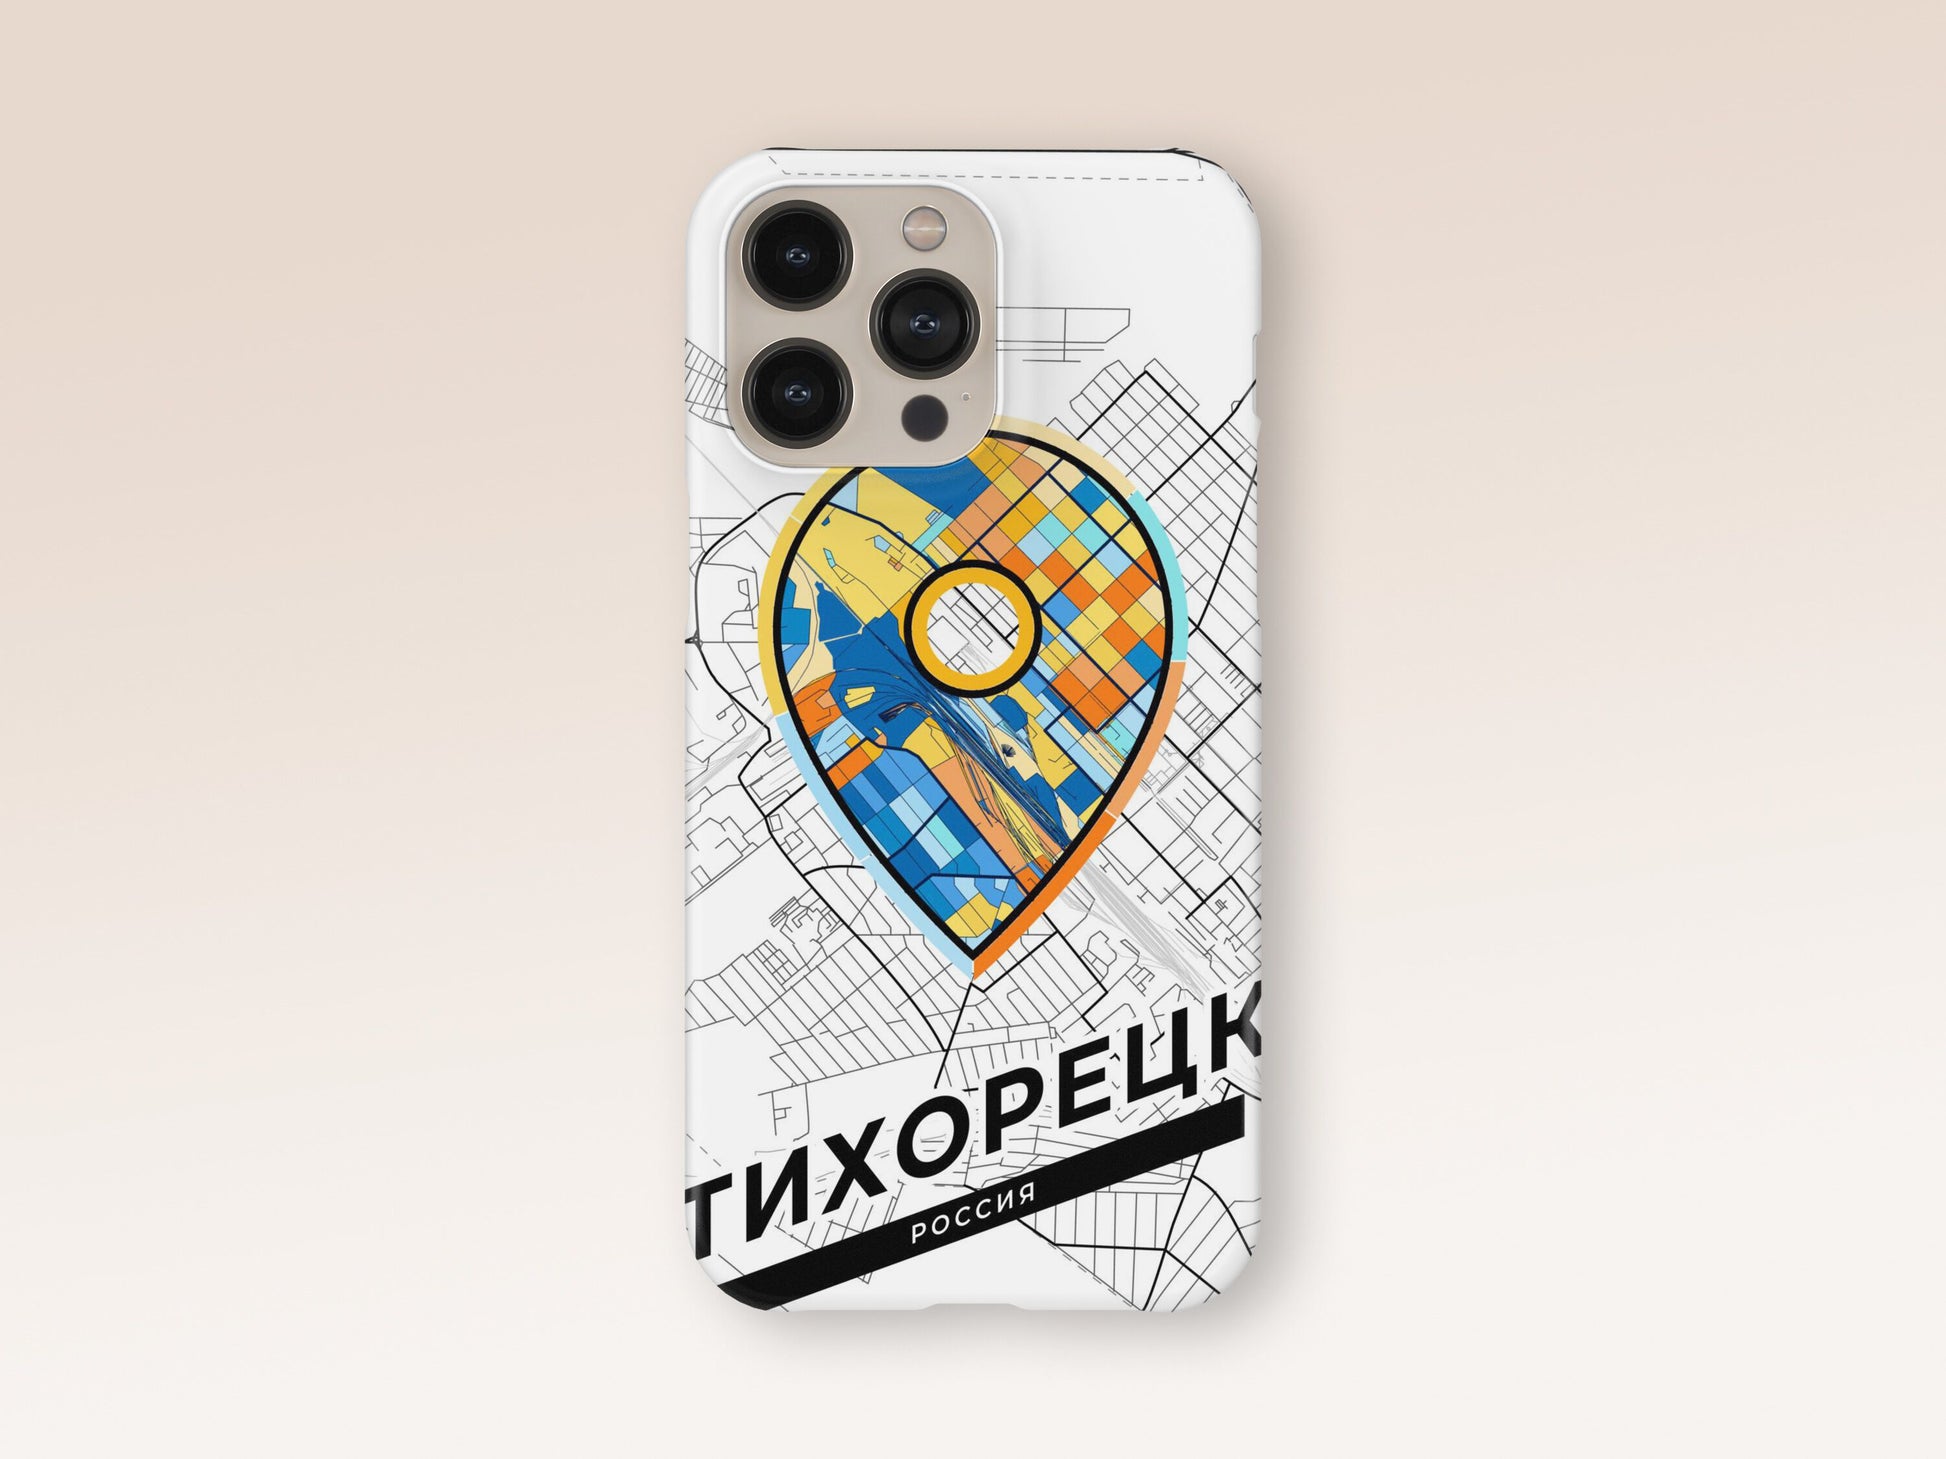 Tikhoretsk Russia slim phone case with colorful icon 1